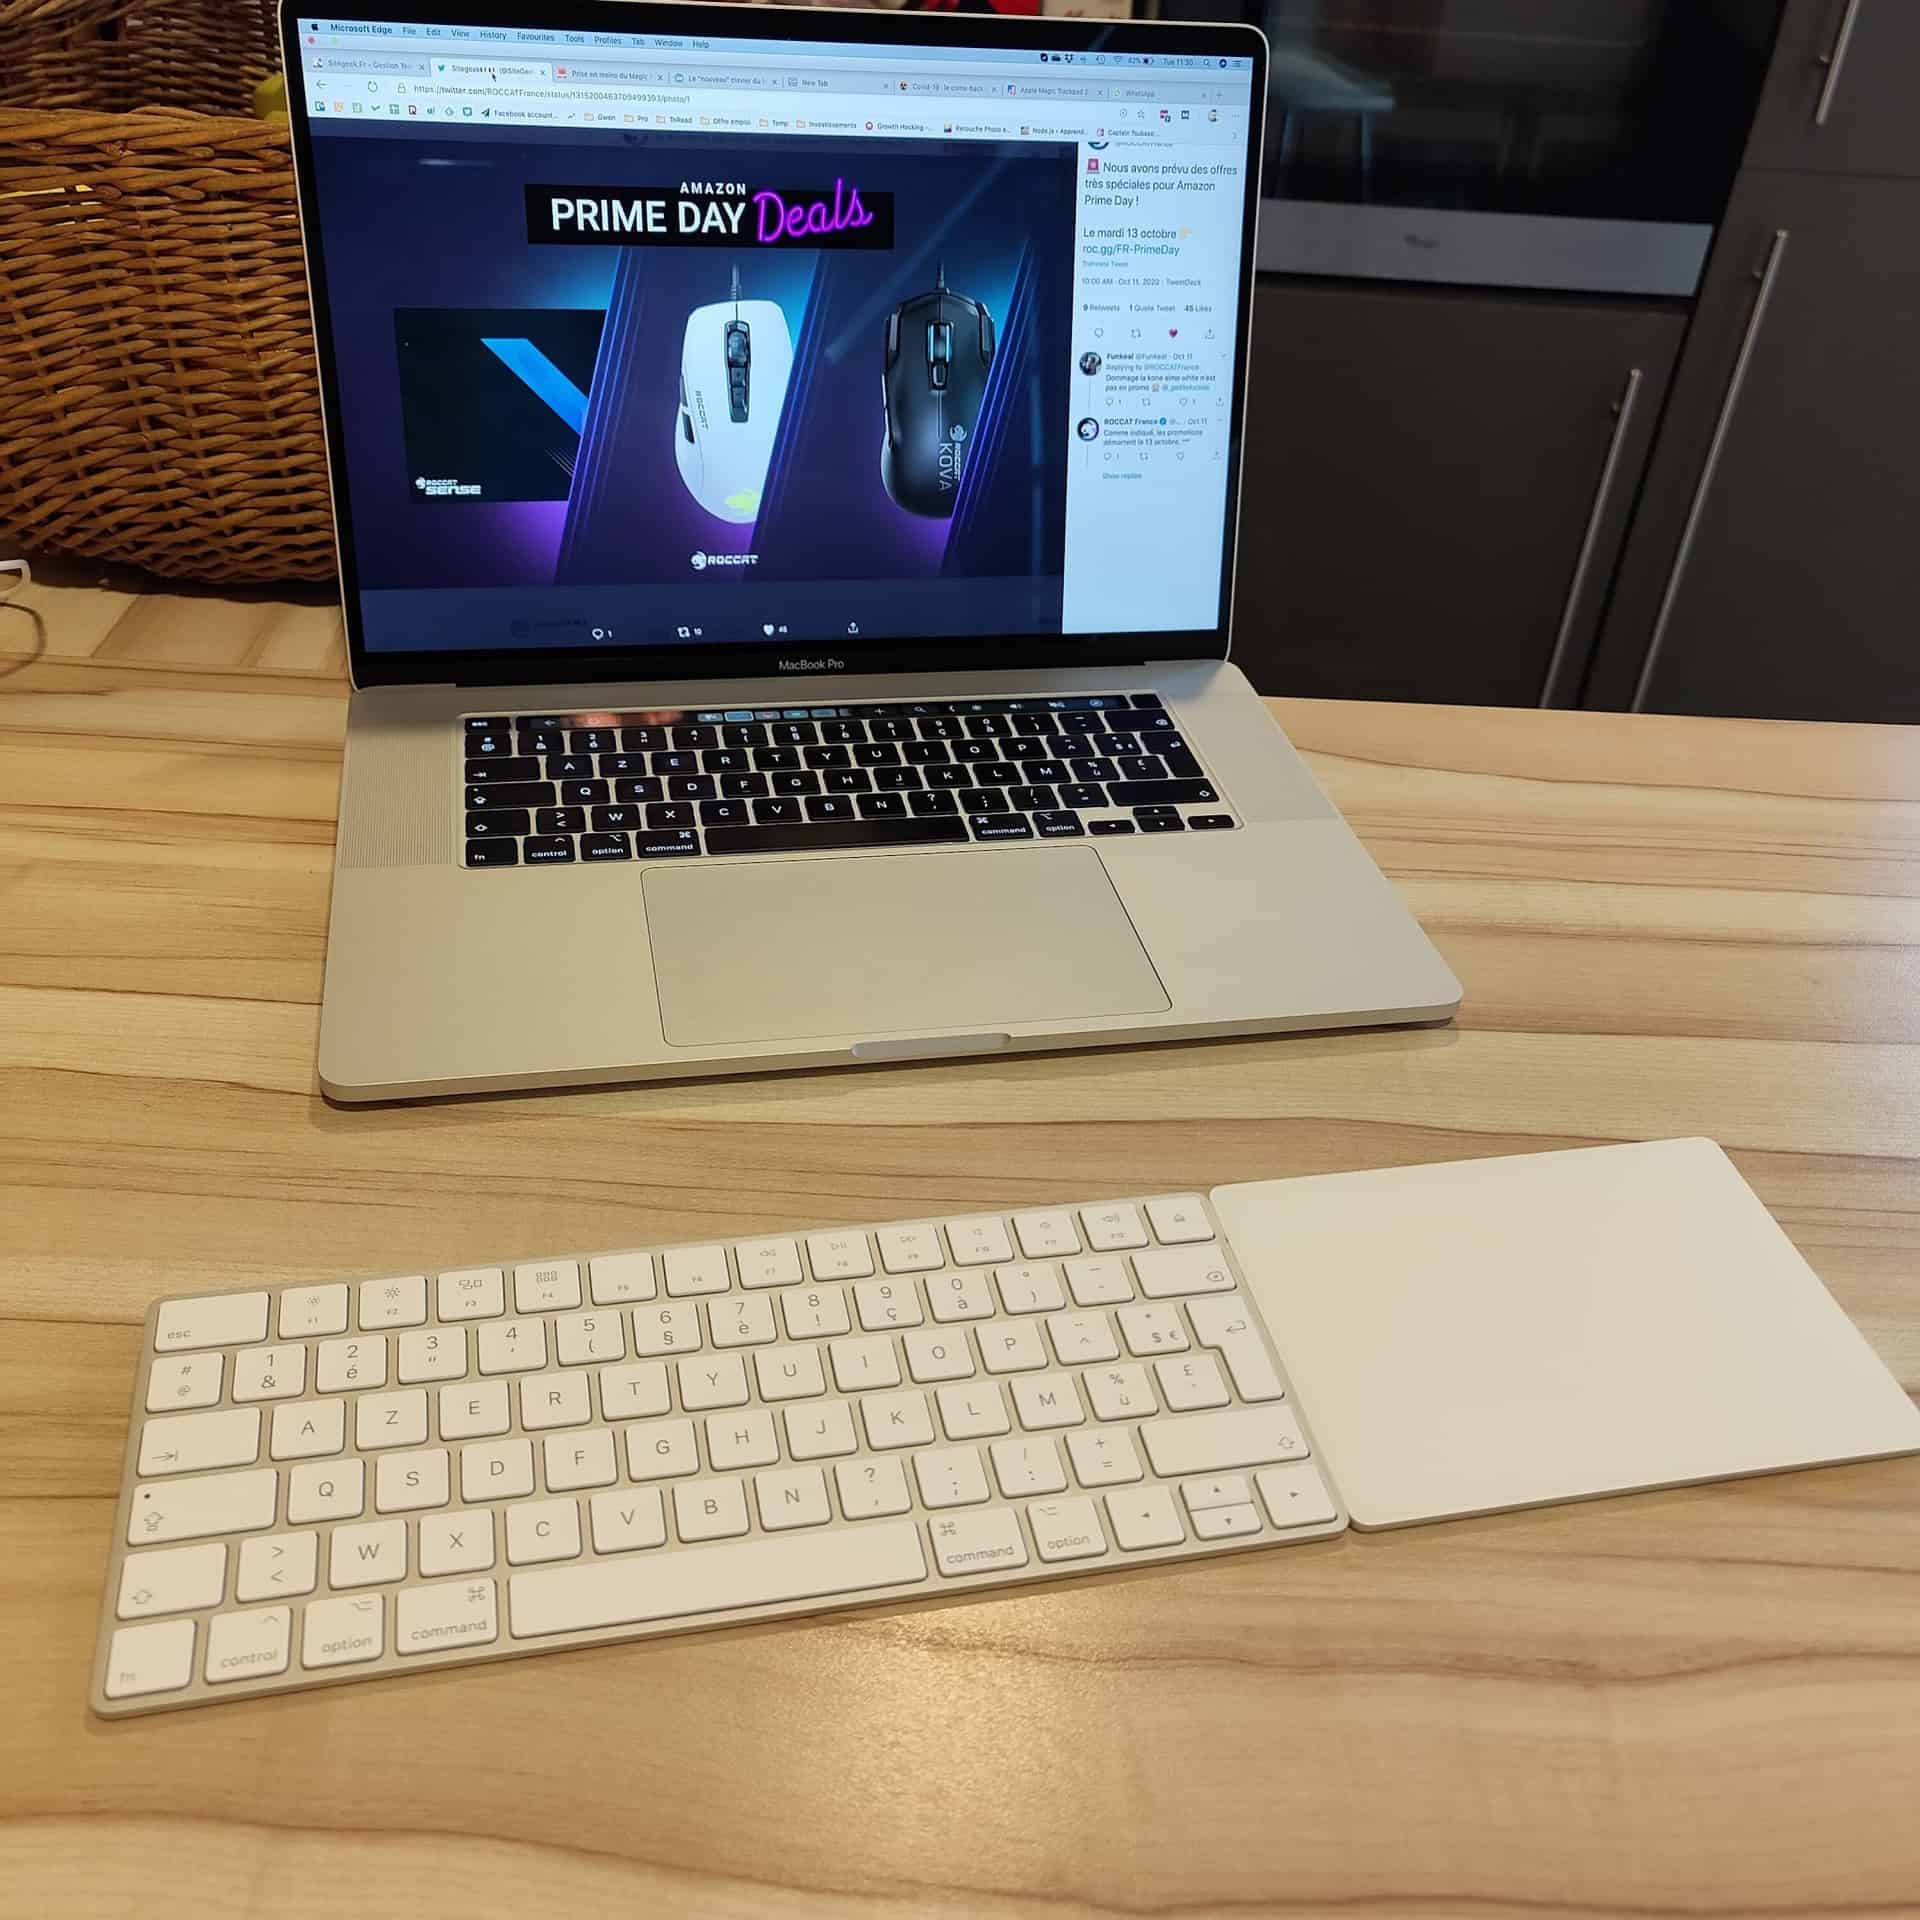 Apple Magic Trackpad 2 - Test du trackpad sans fil Mac avec